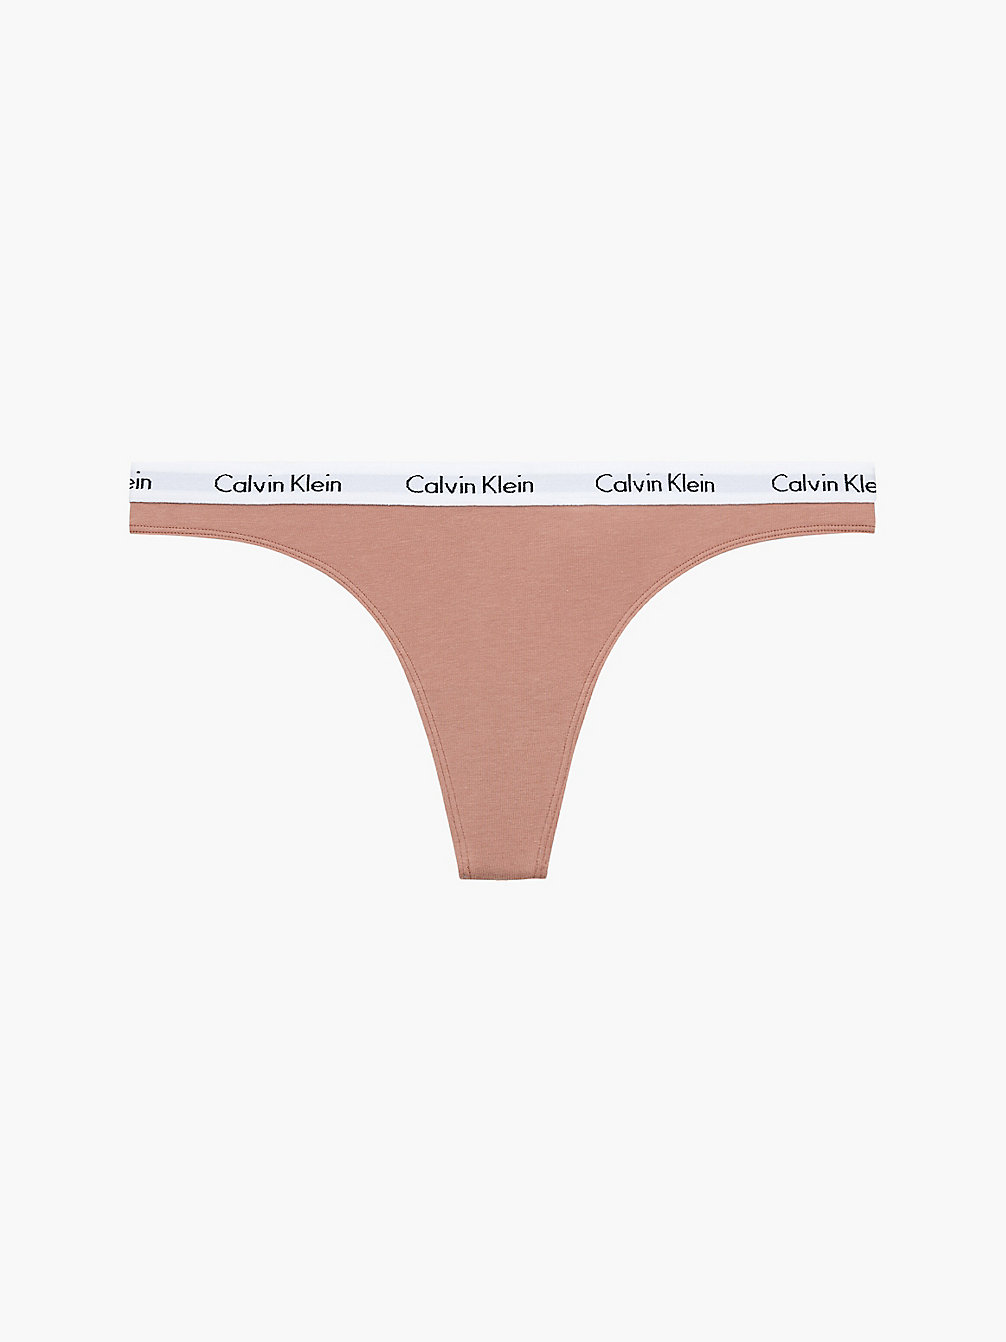 SUNDOWN ORANGE Thong - Carousel undefined women Calvin Klein